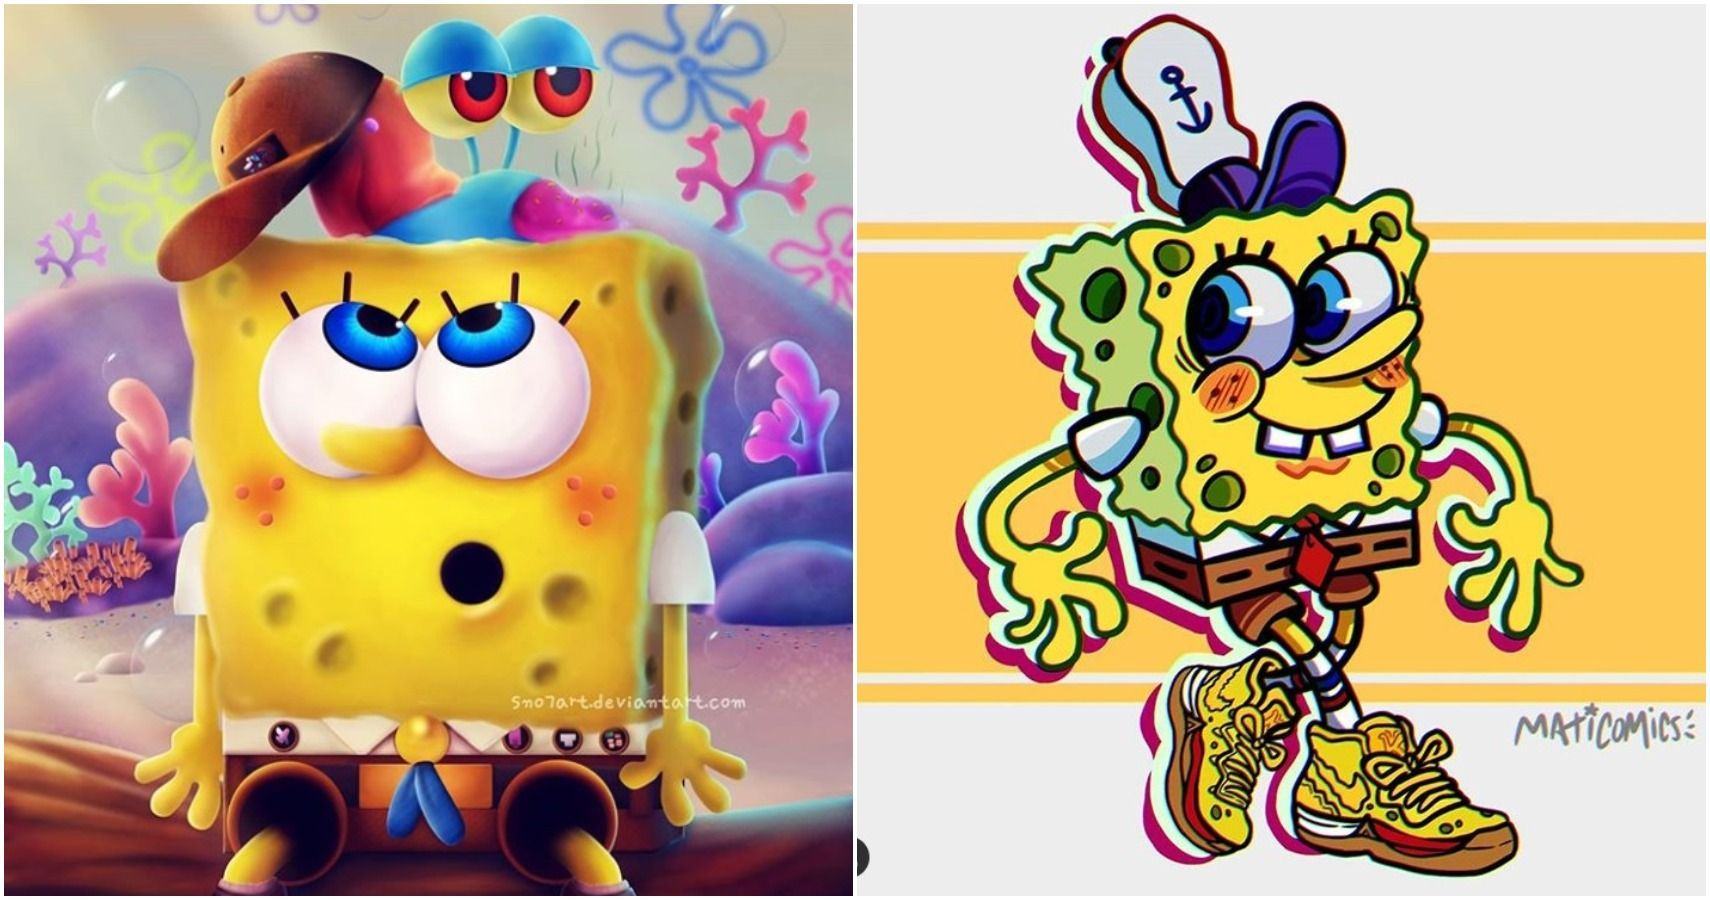 SpongeBob SquarePants: 10 Fan Art Pieces Of SpongeBob That Are Awesome ...